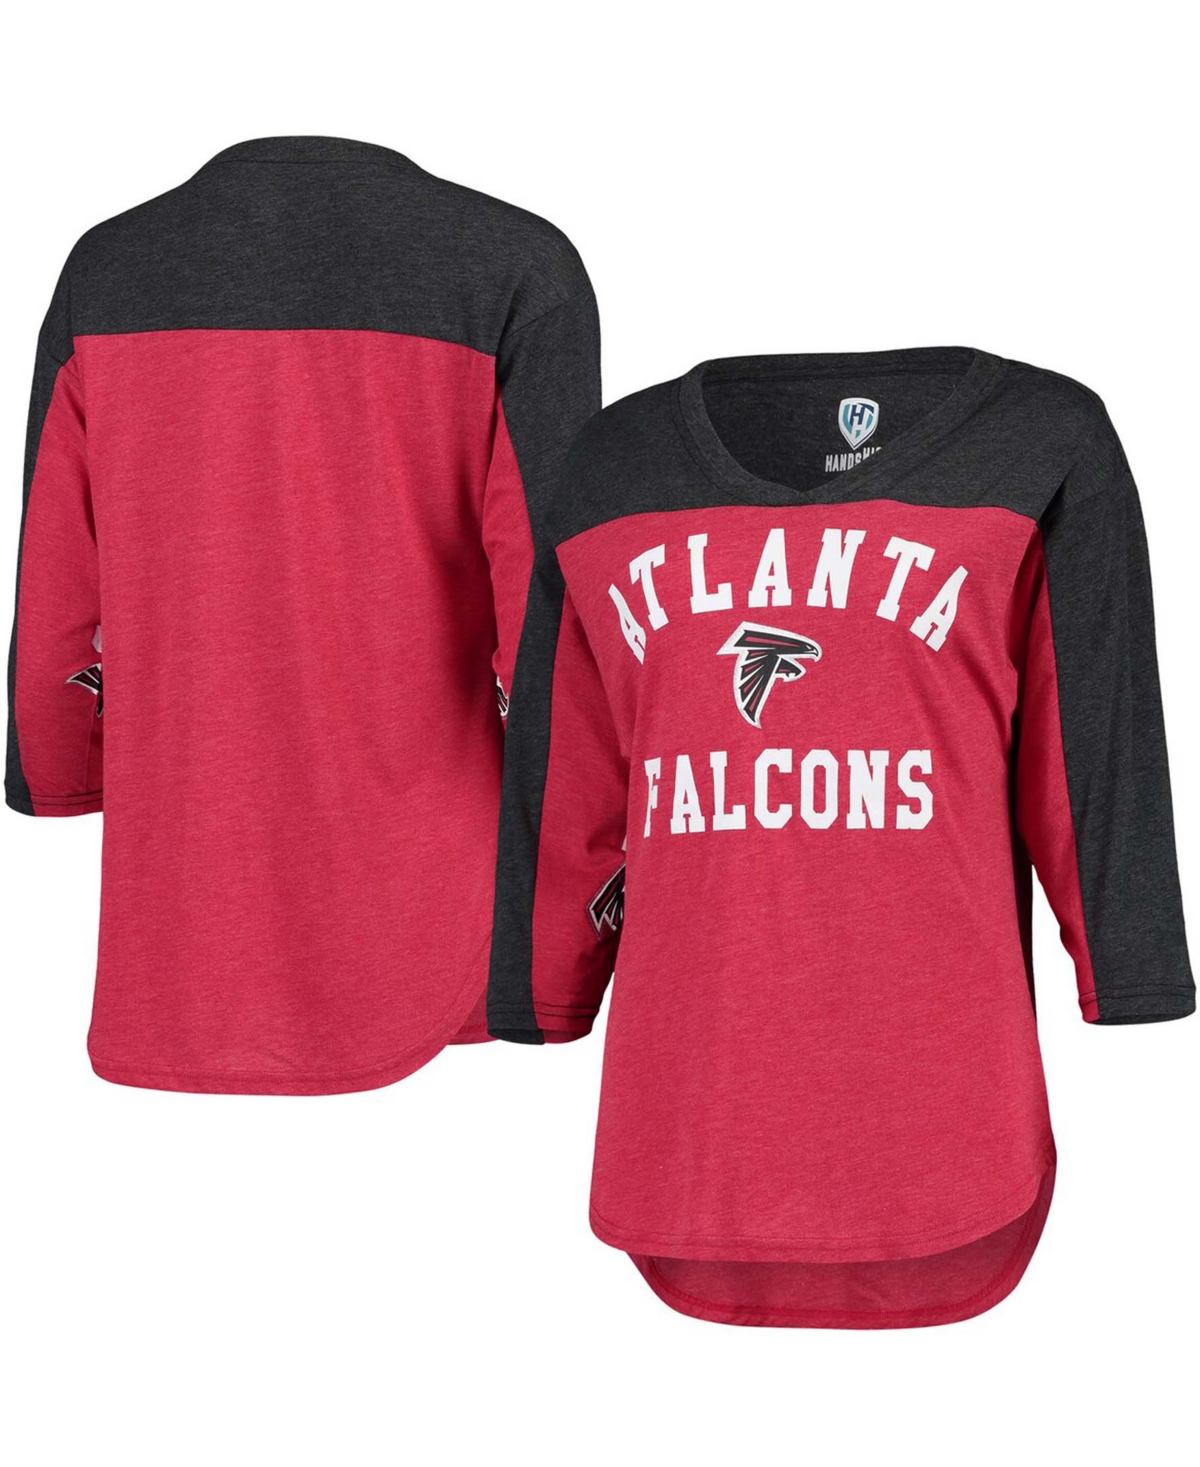 Women's Red, Black Atlanta Falcons In The Zone 3/4 Sleeve V-Neck T-shirt